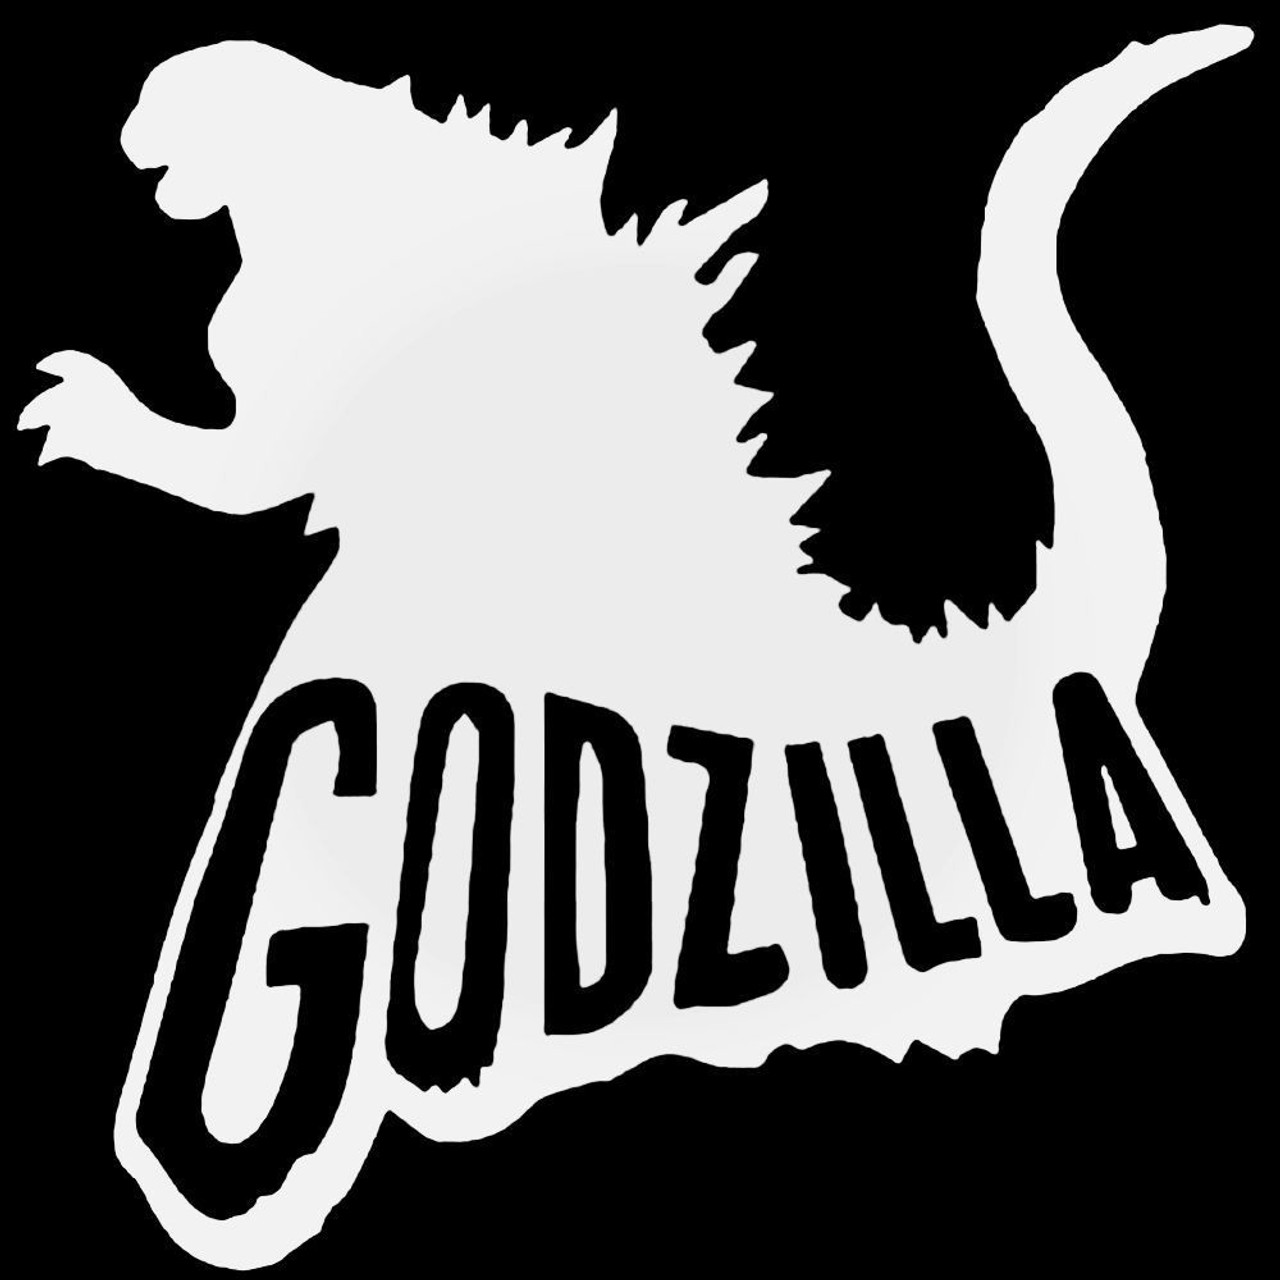 Godzilla Text Vinyl Decal Sticker